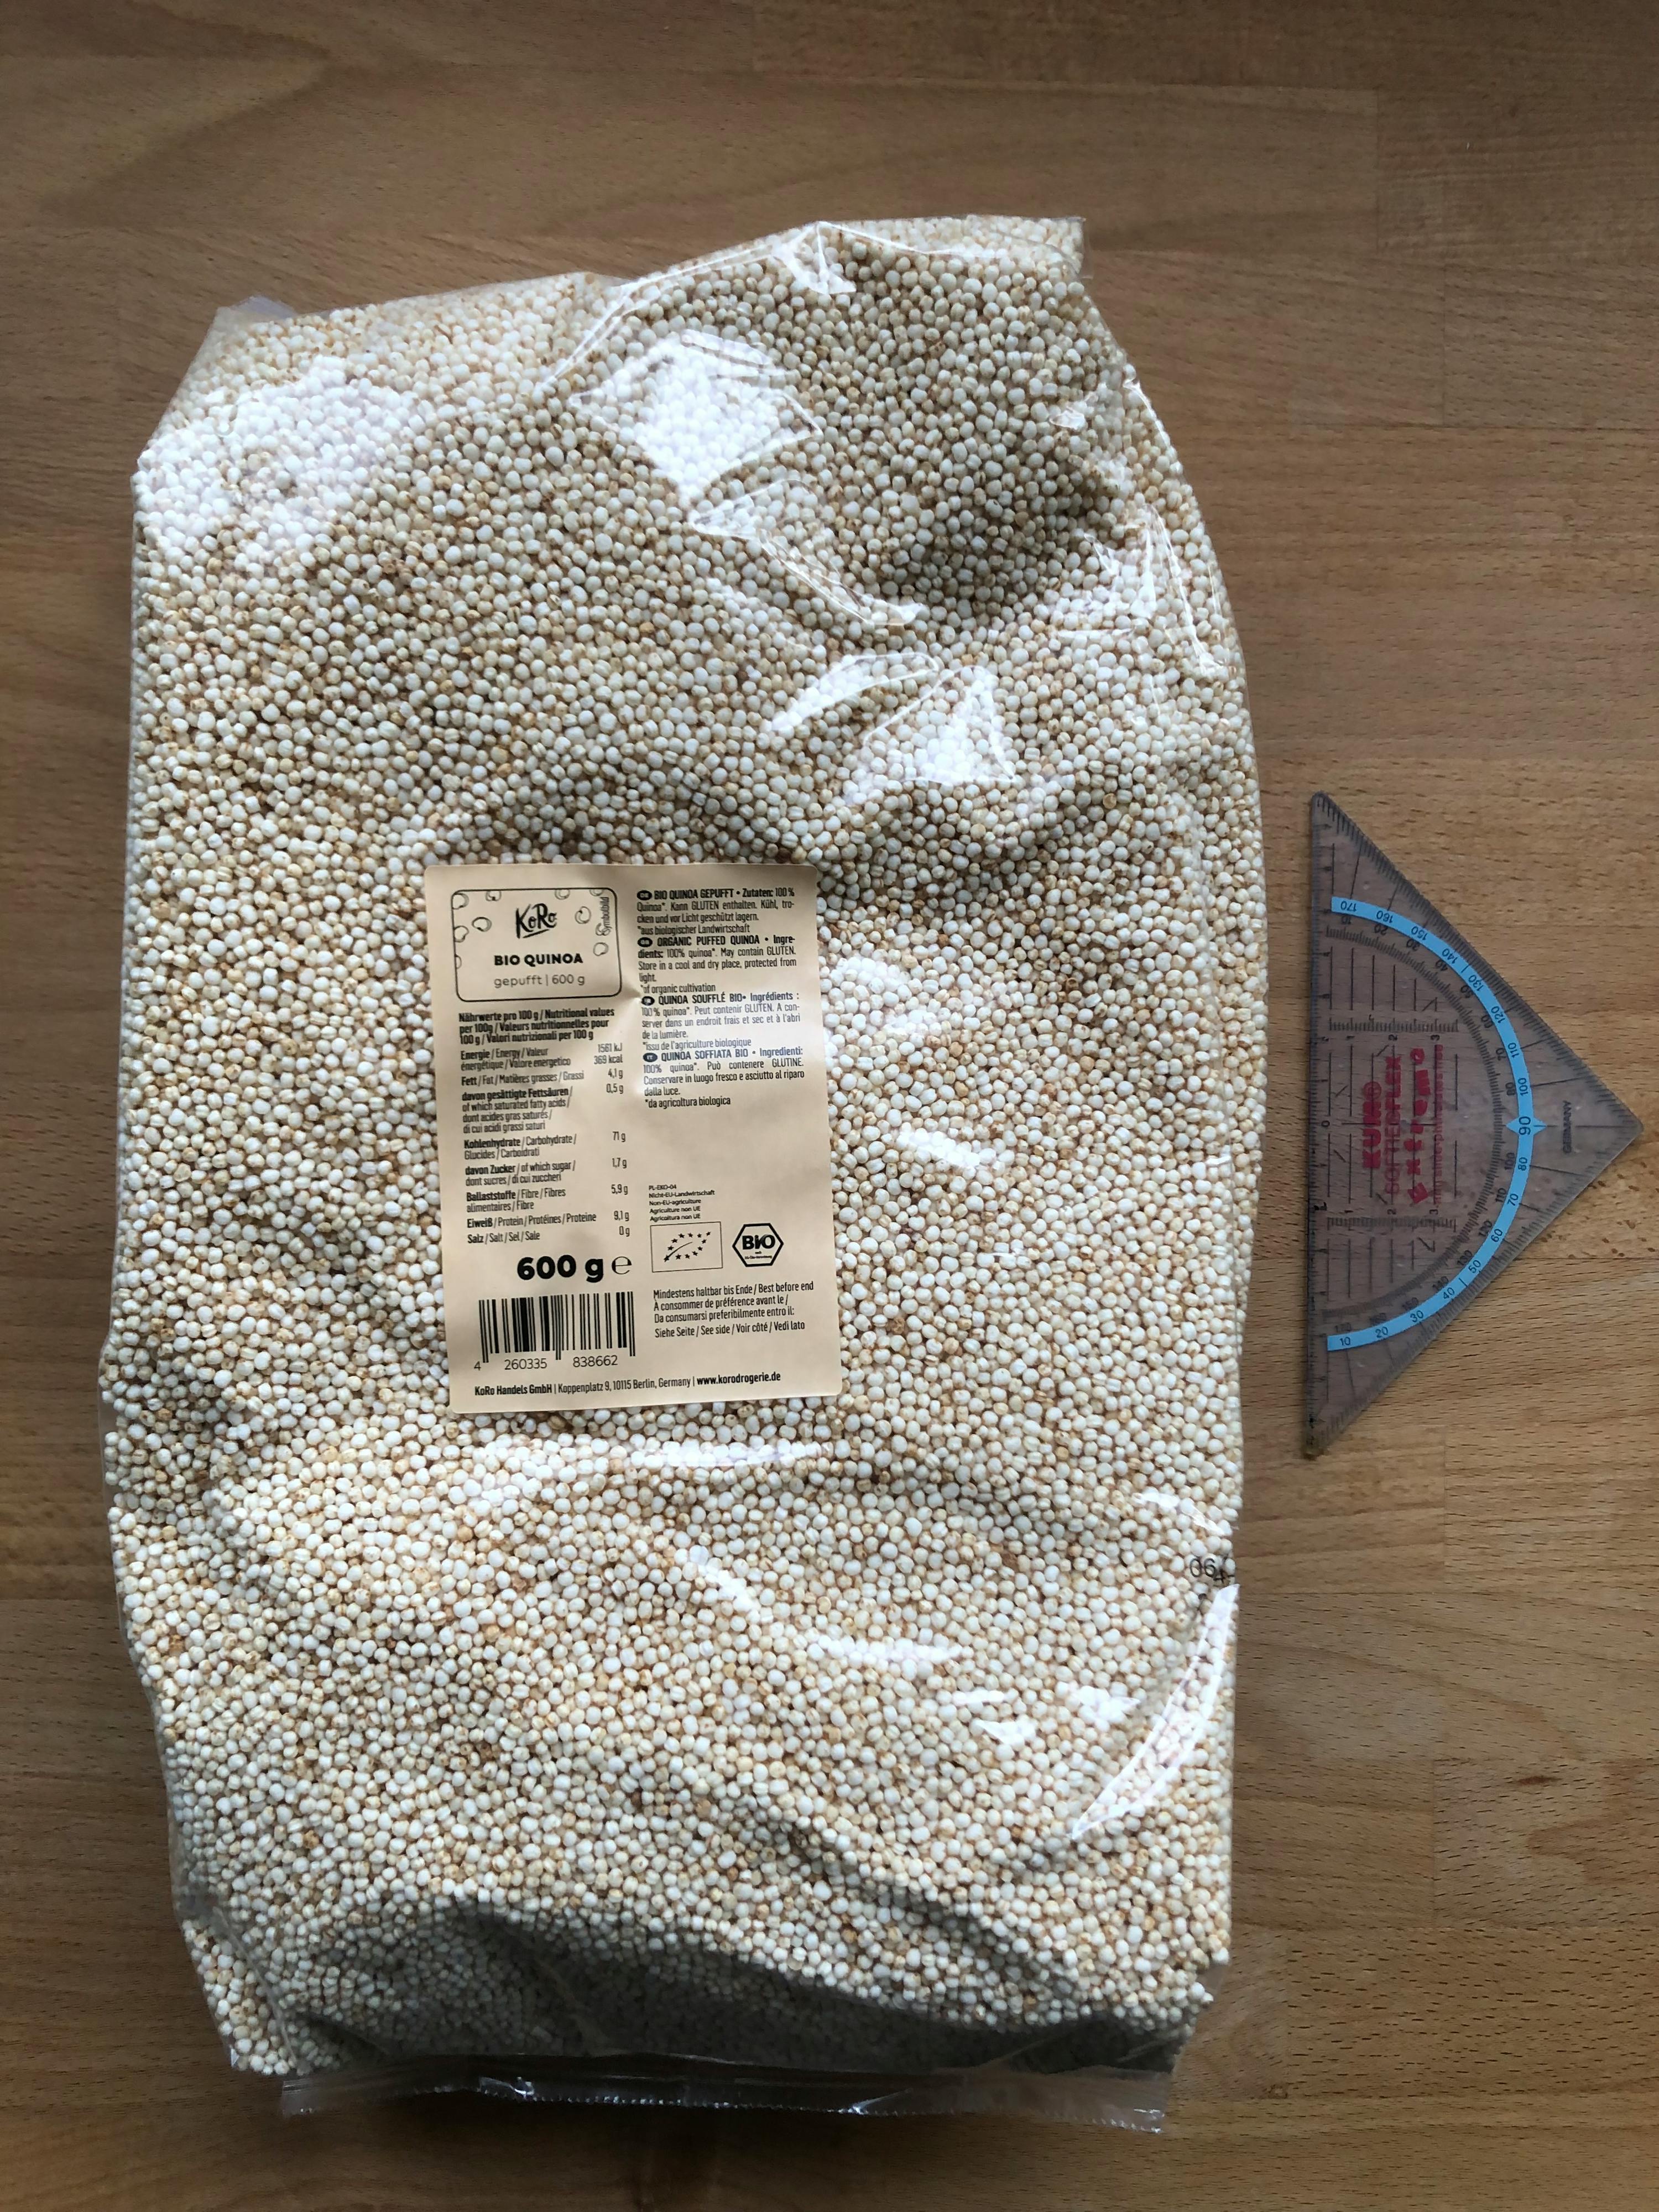 El Granero Integral Quinoa Hinchada Bio 250 gr - BULEVIP